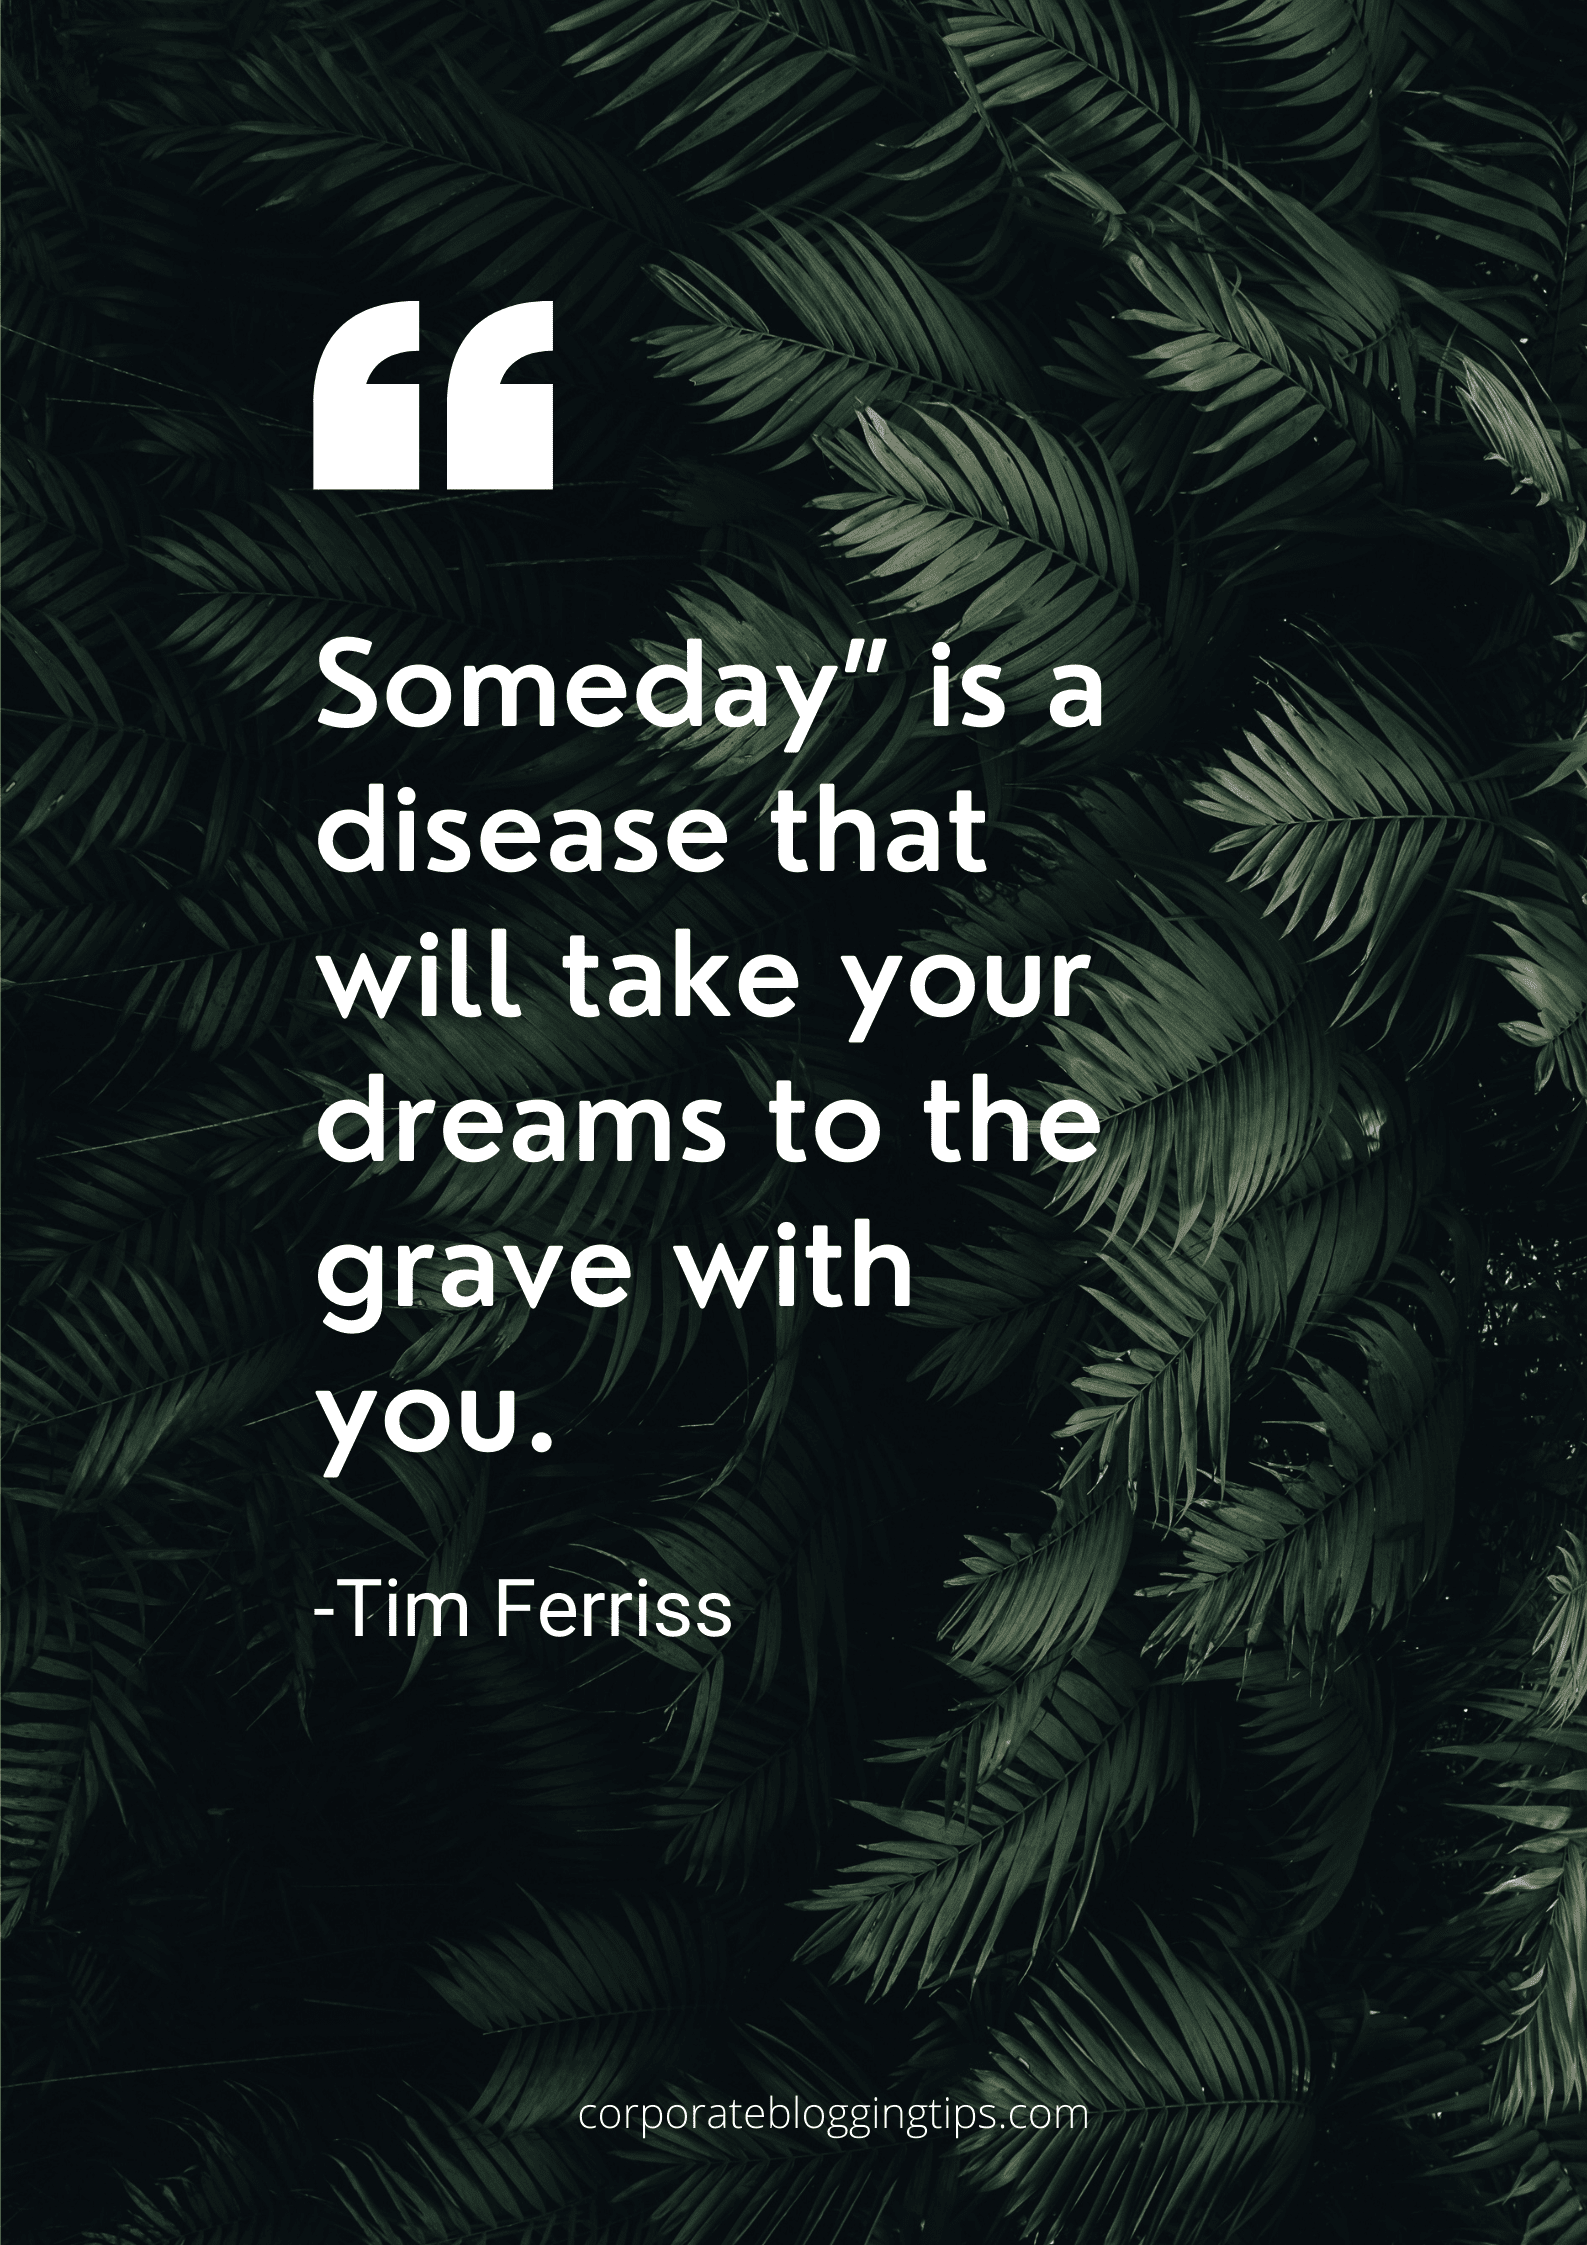 Tim Ferriss words